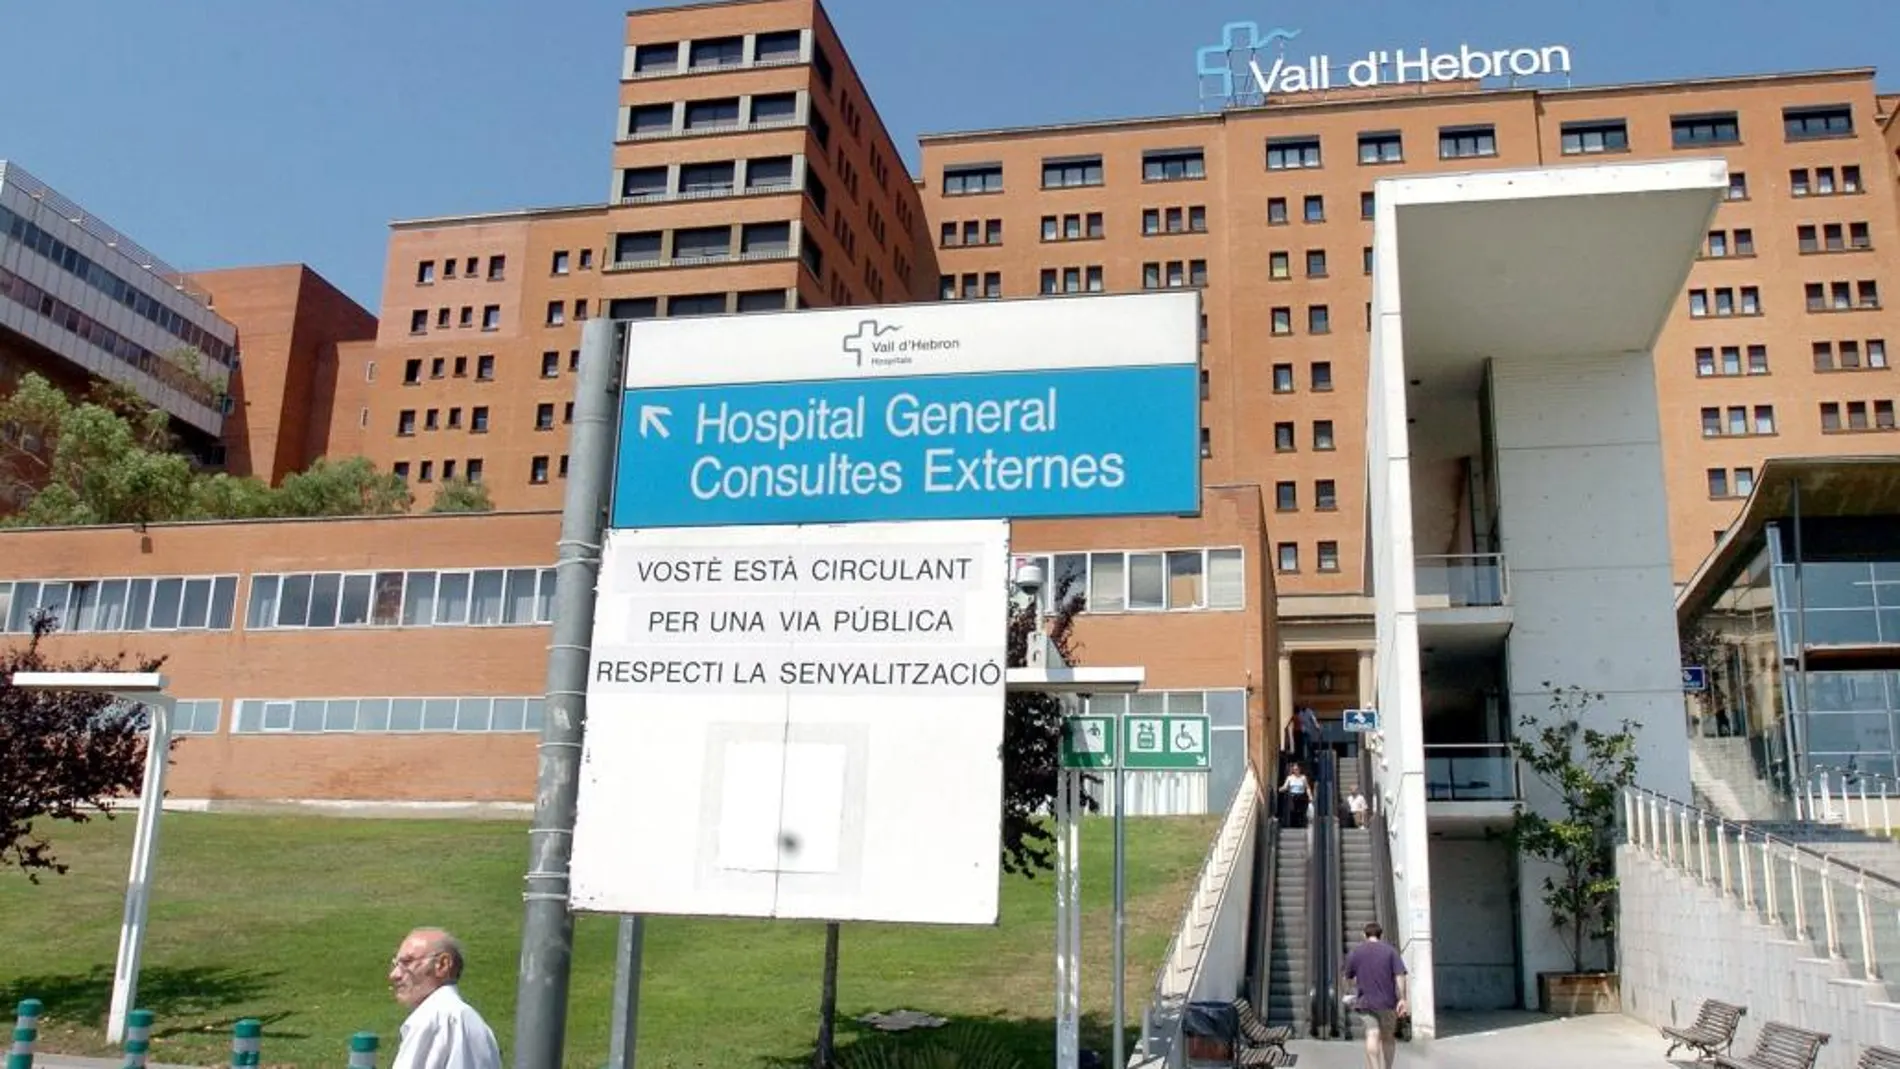 Hospital Vall d’Hebron de Barcelona